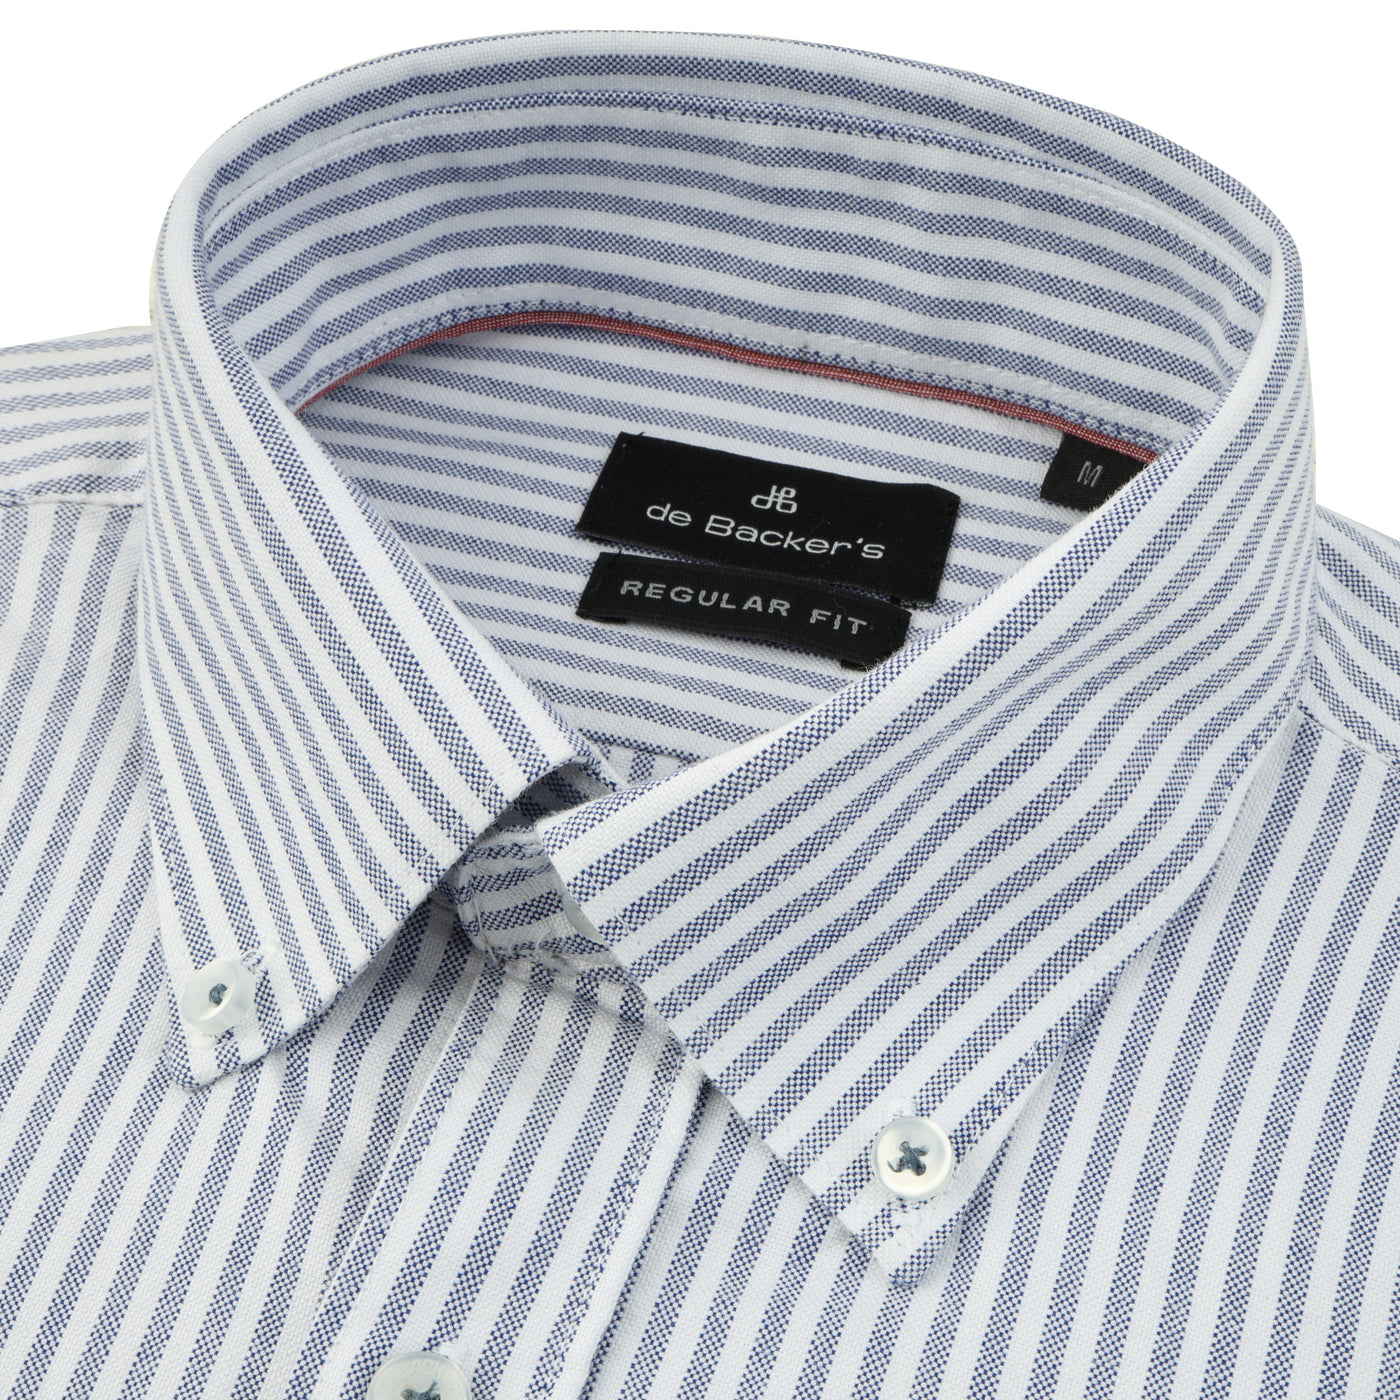 Striped White & Light Blue  Oxford Casual Shirt